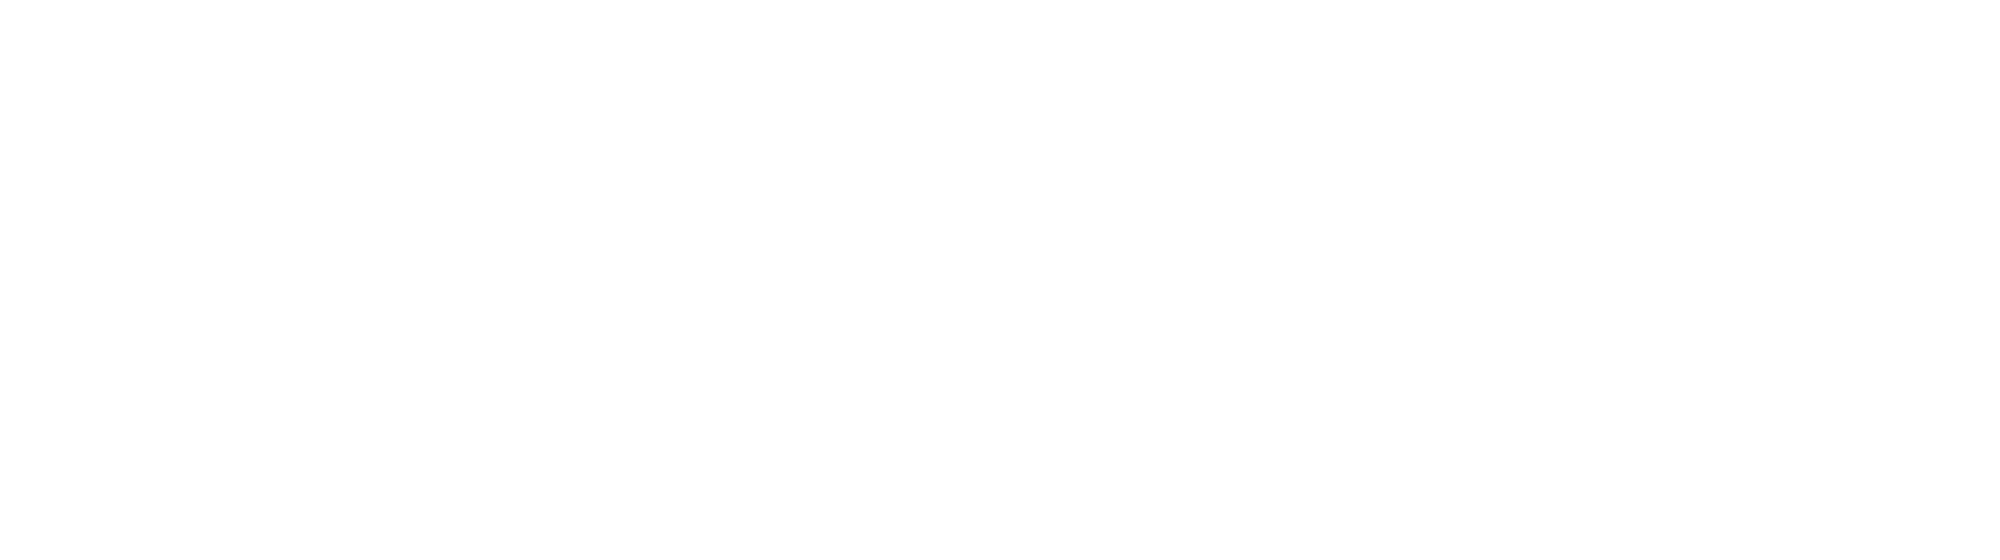 Zoom Secrets For Yoga Classes